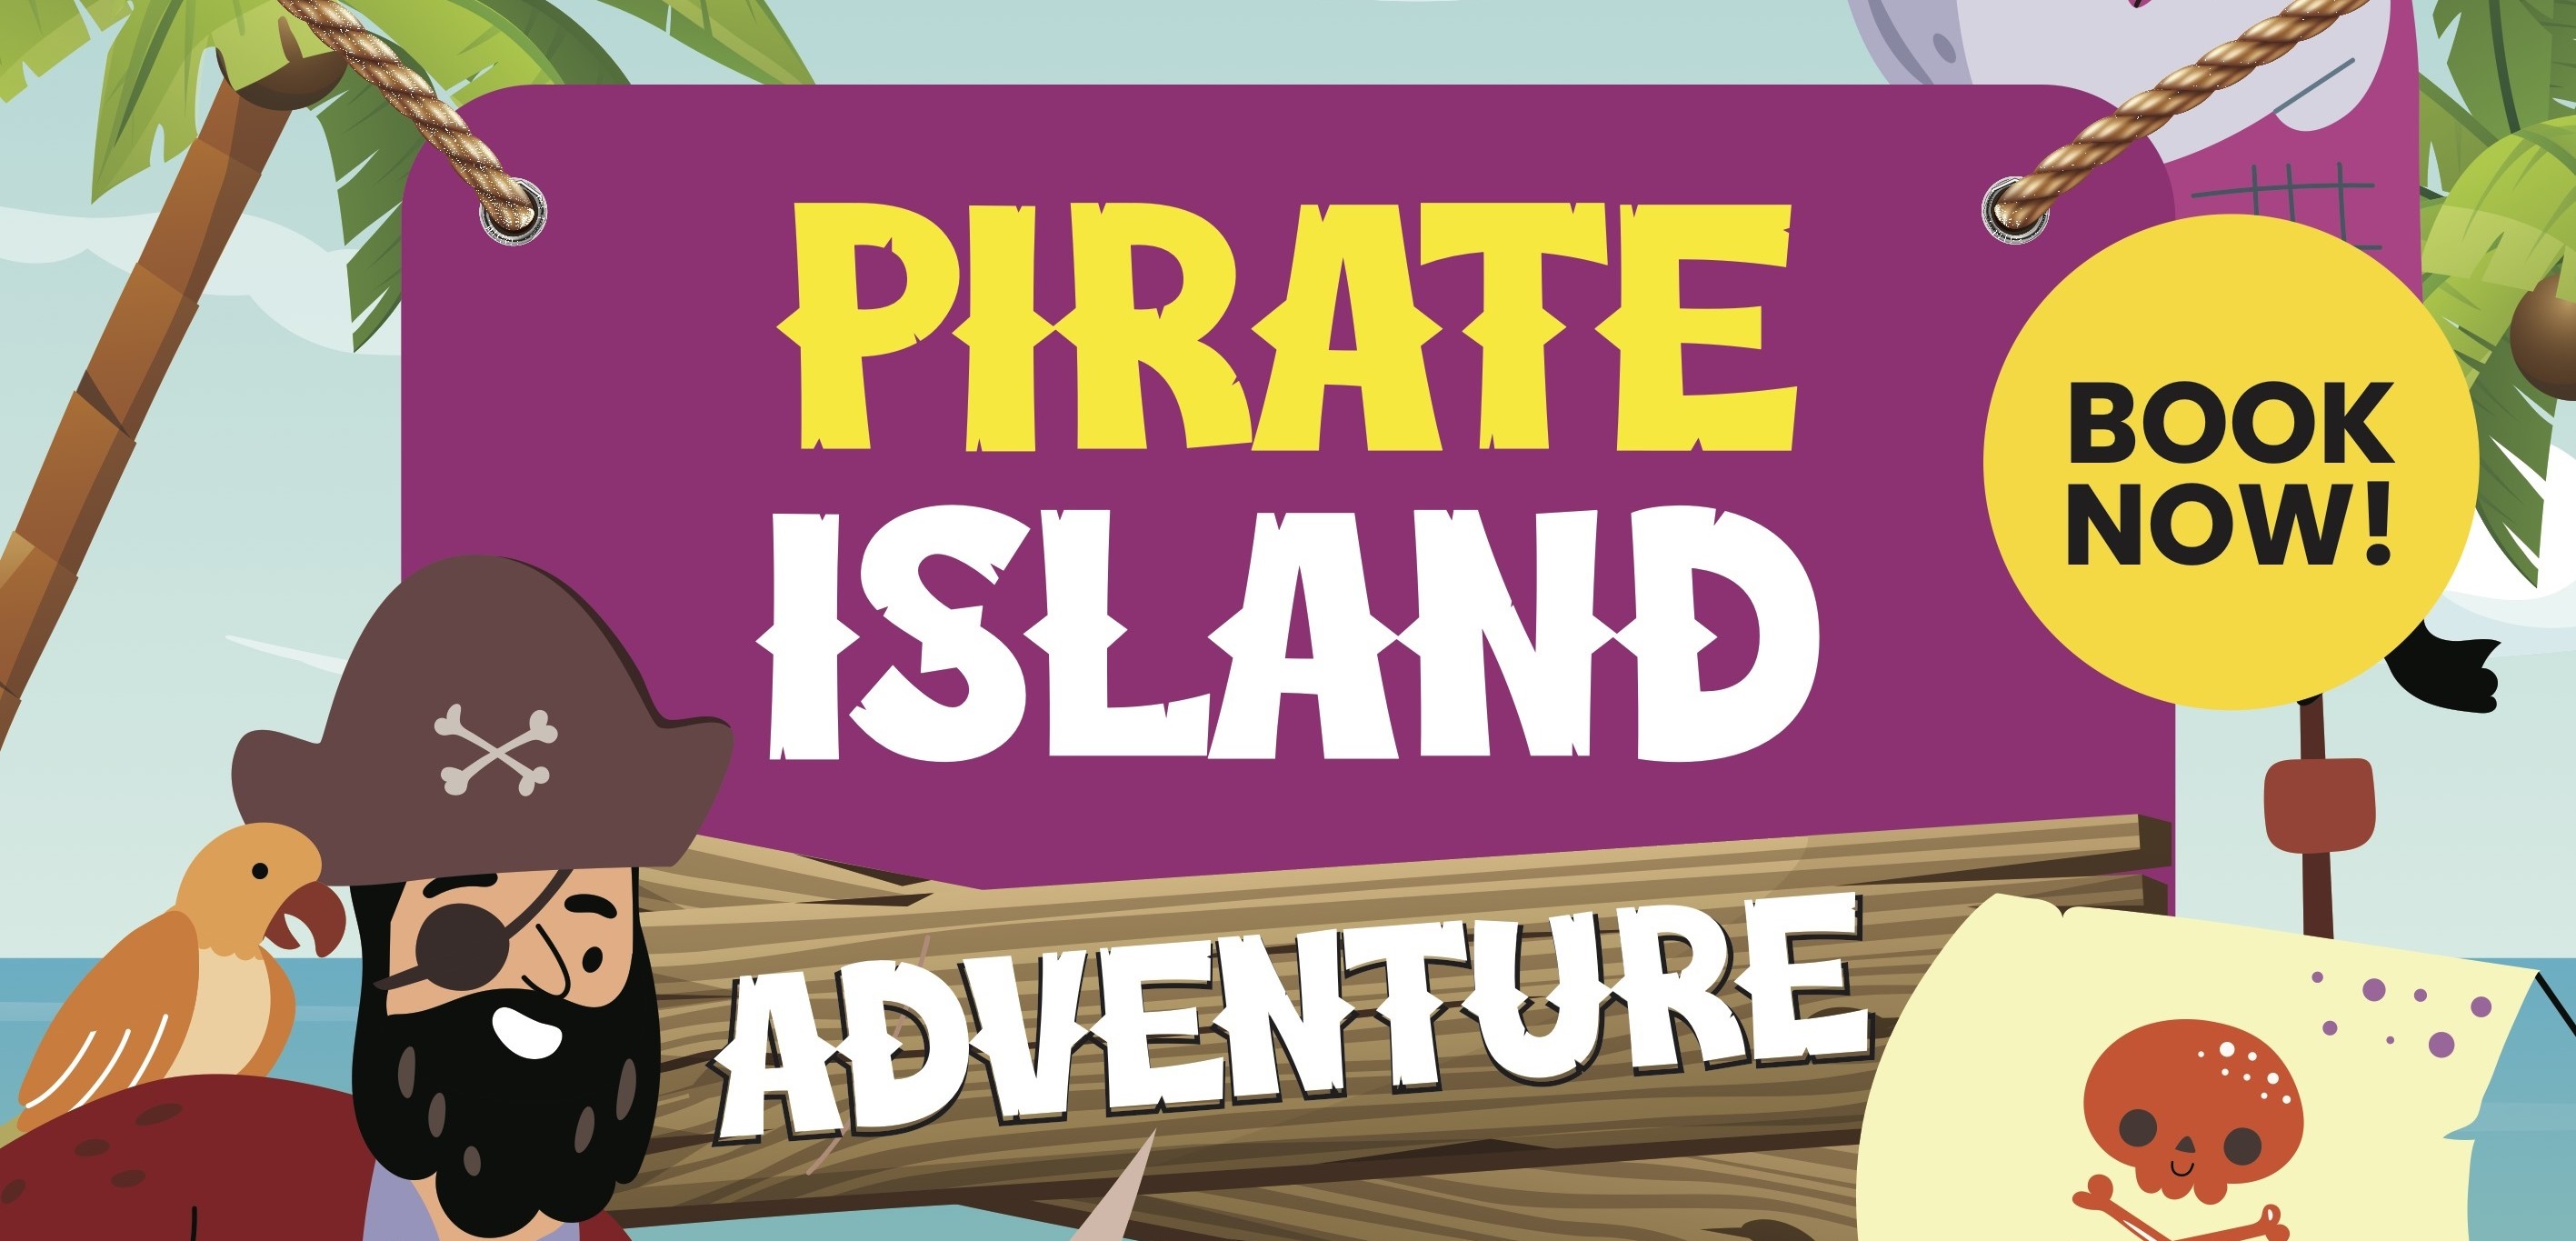 Pirate Island Adventure